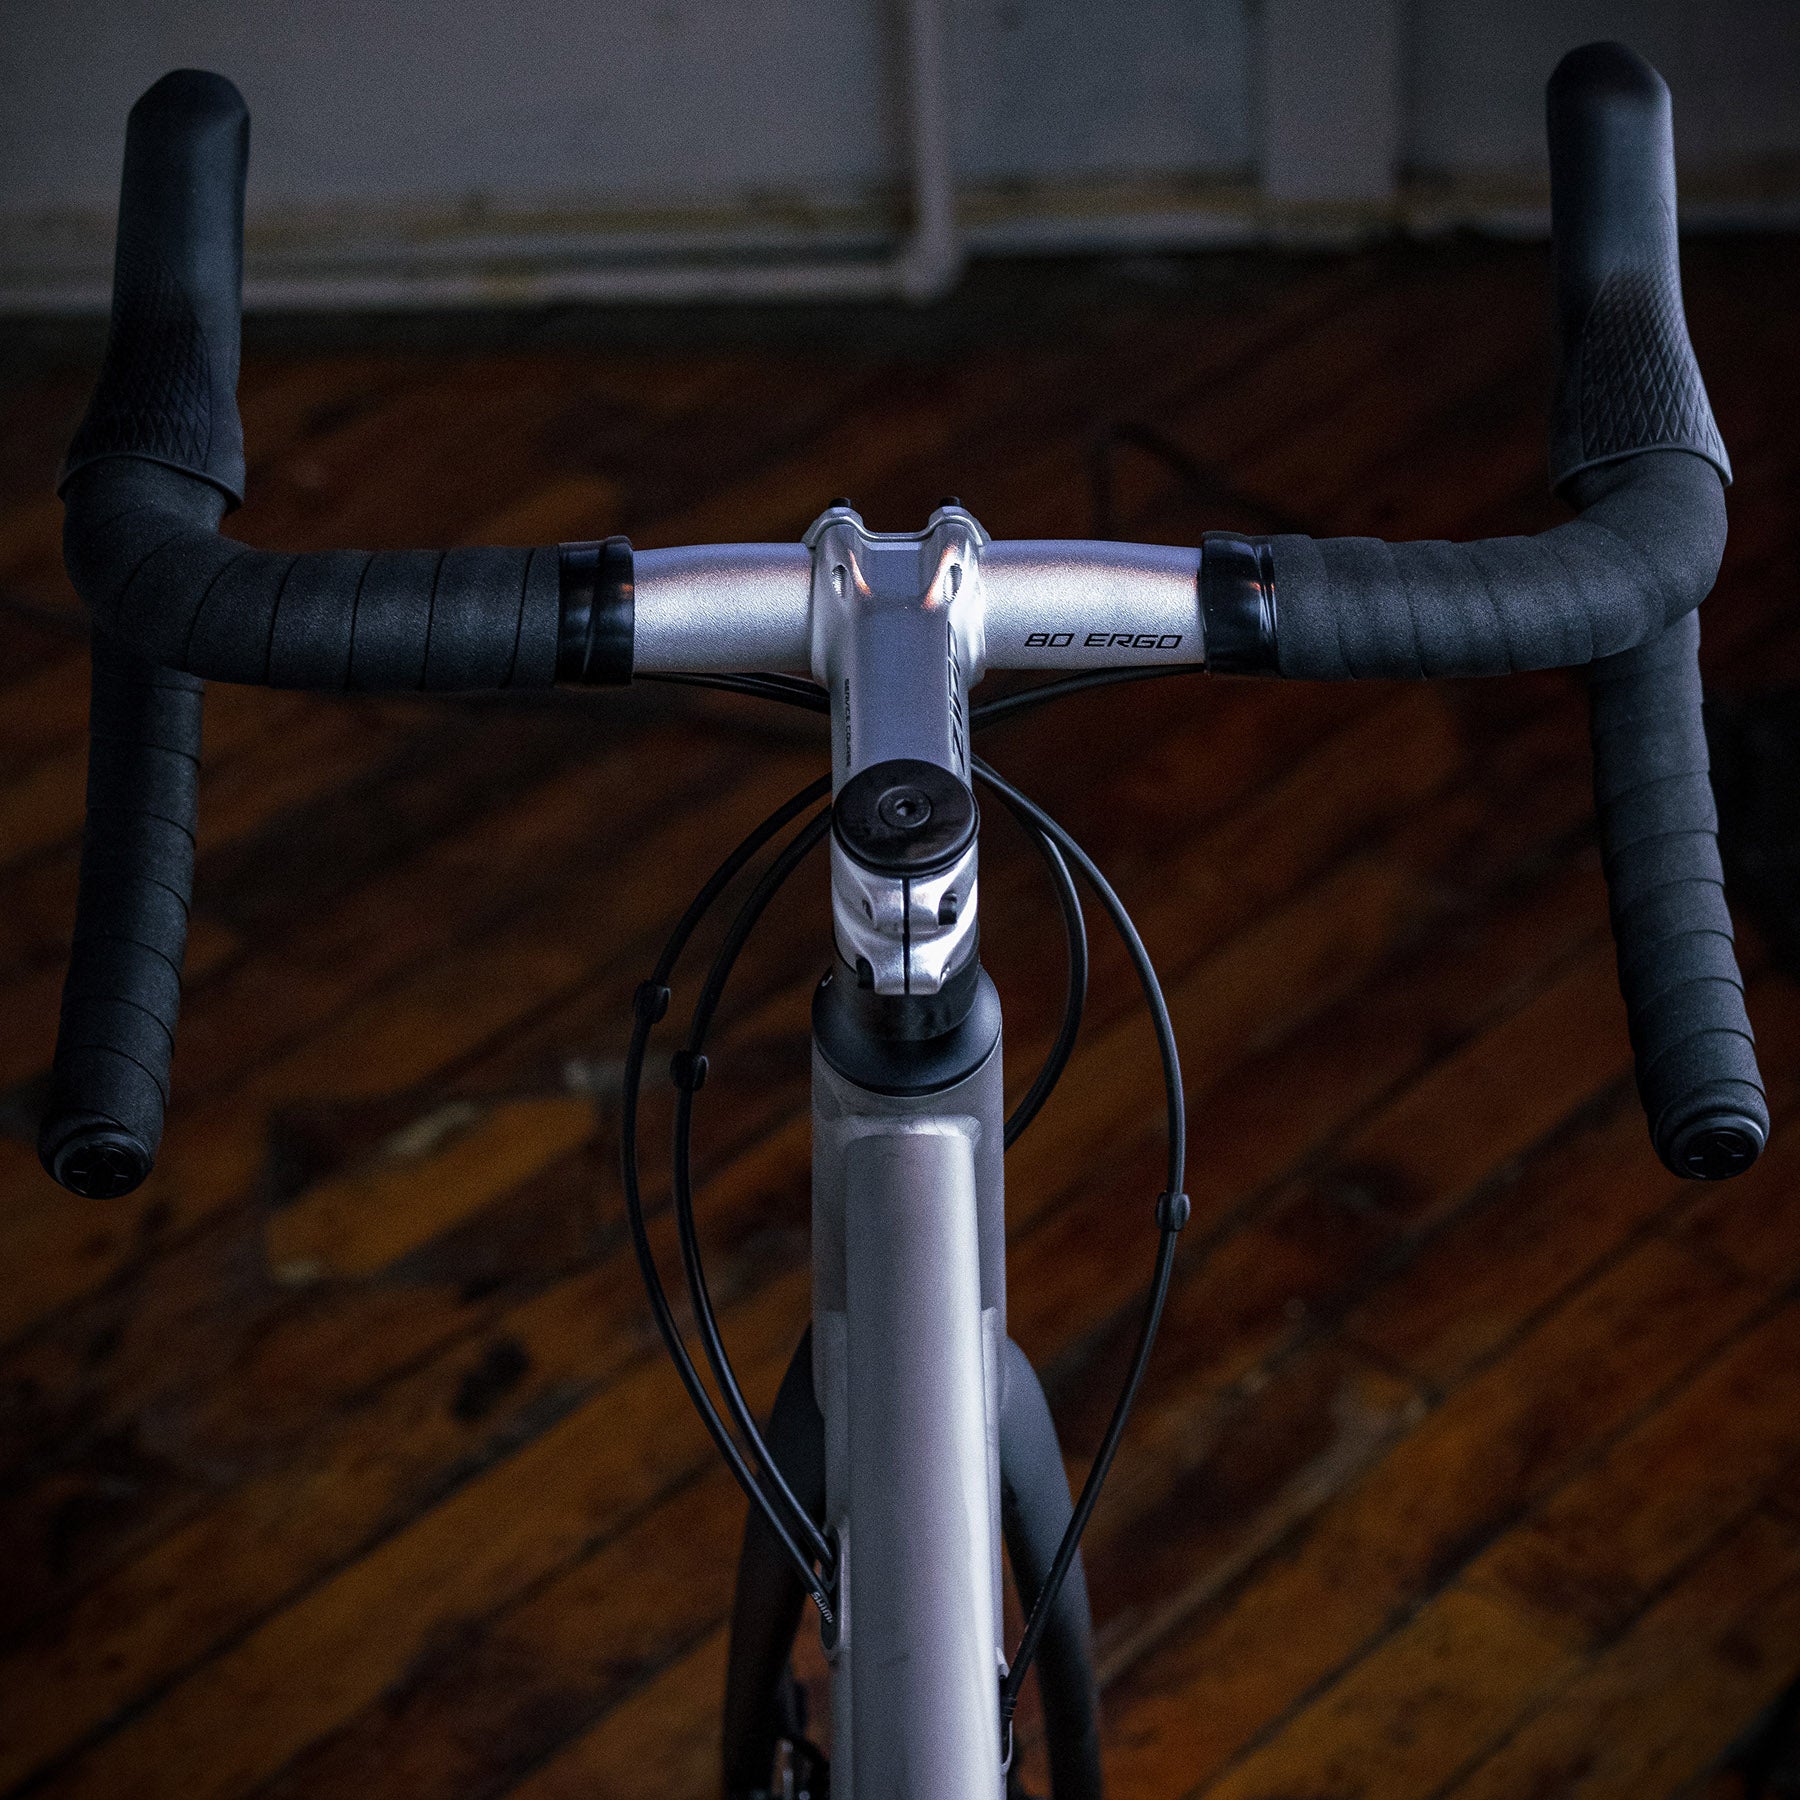 Hero image featuring the handlebars of the BSC Ti road bike